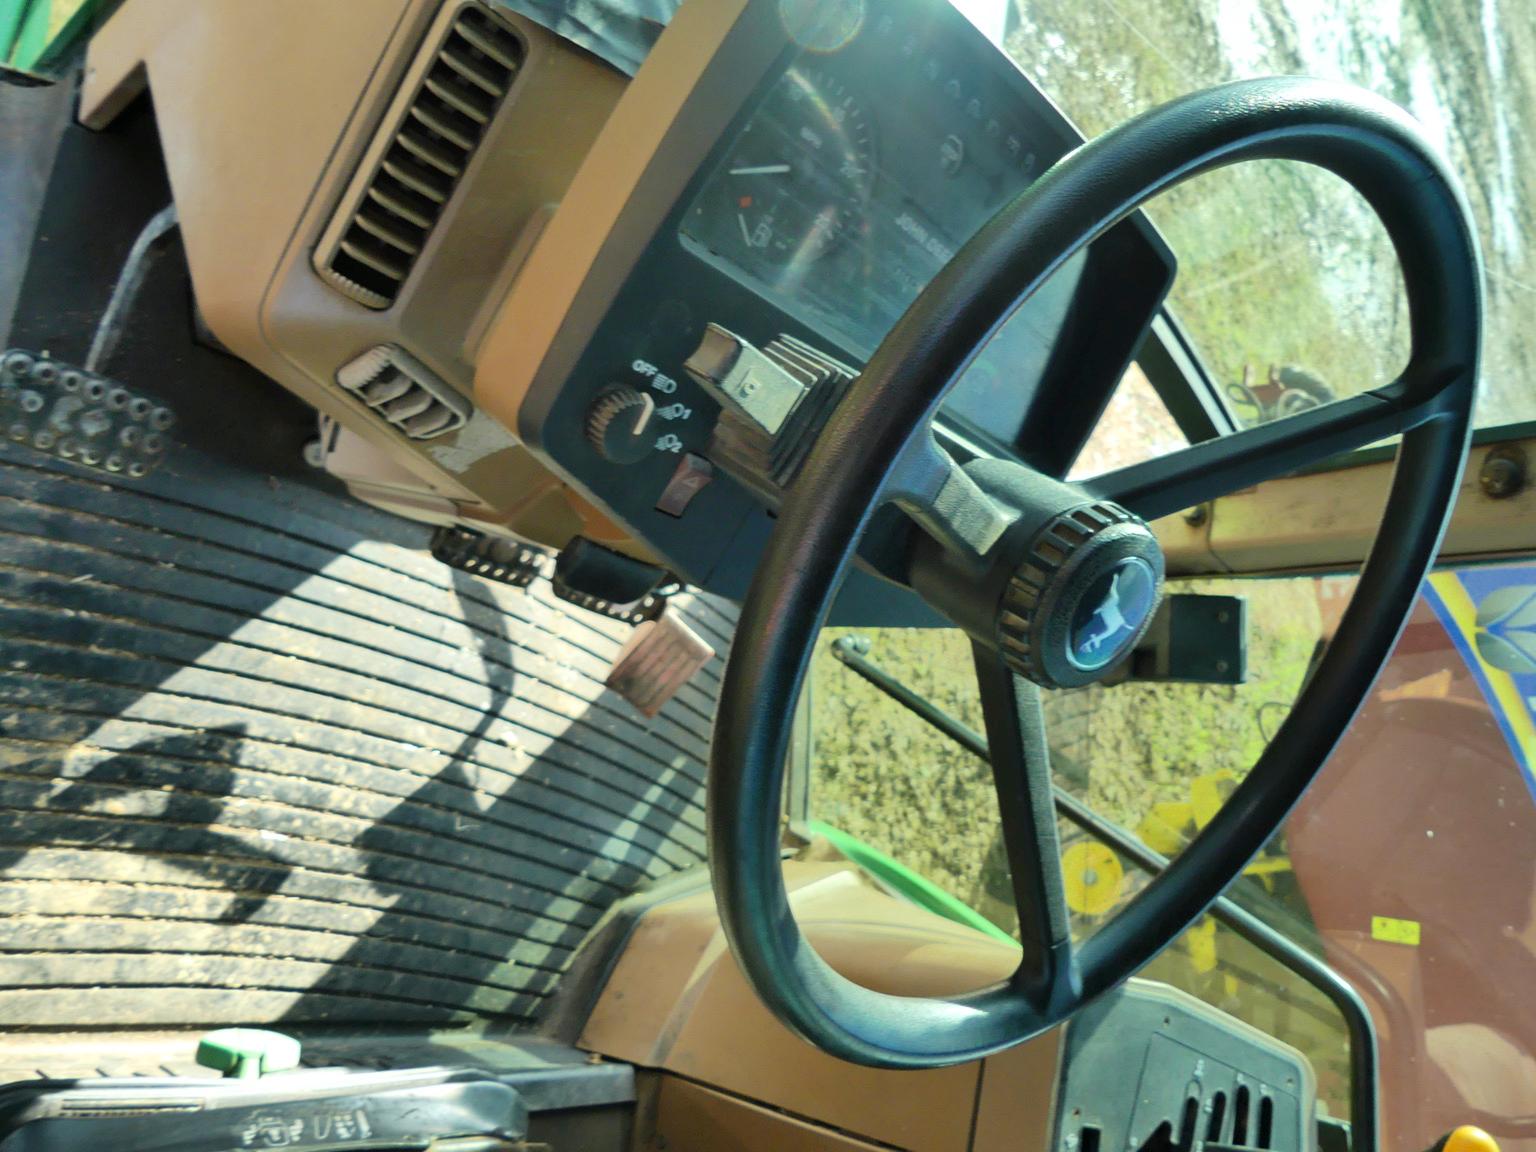 John Deere 6400 MFWD Tractor, s/n L06400V128074: C/A, Meter Shows 5626 hrs